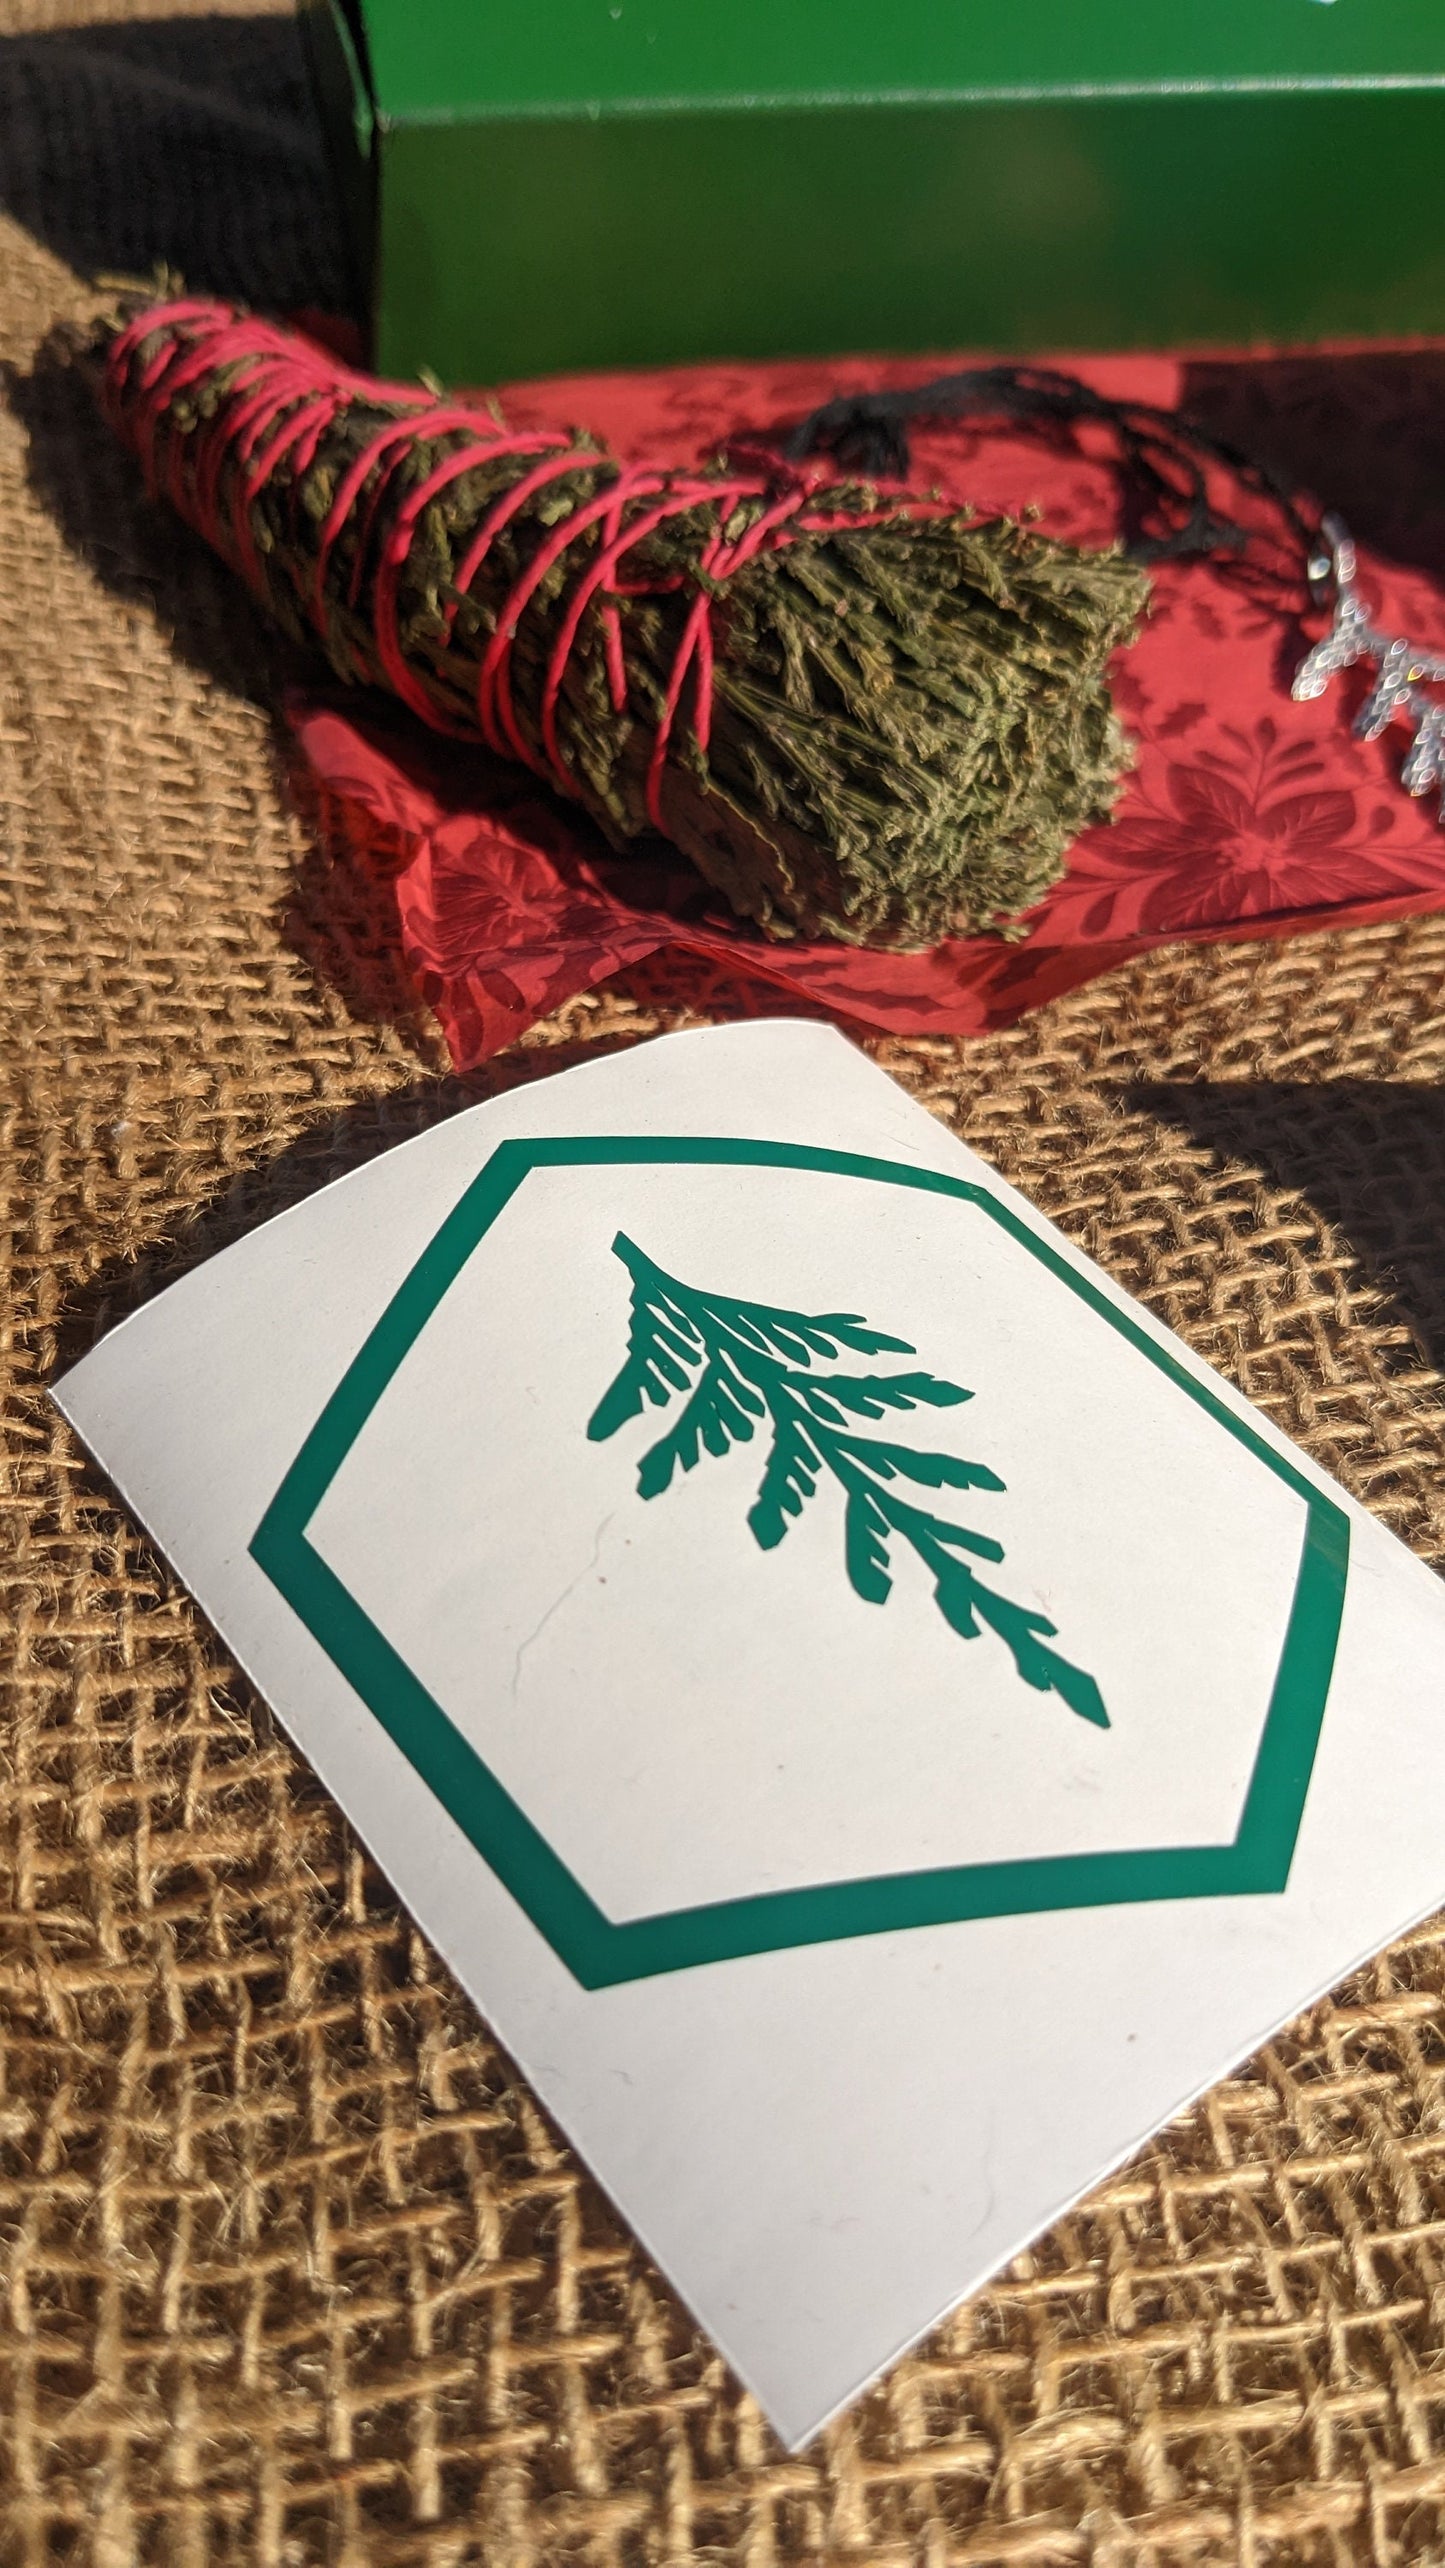 Cedar Gift Box - Includes Cast Cedar Leaf Pendant, Oregon Cedarwoods Soap, Cedar Smoke Cleansing Wand, and Cedar Leaf Hexagon Decal